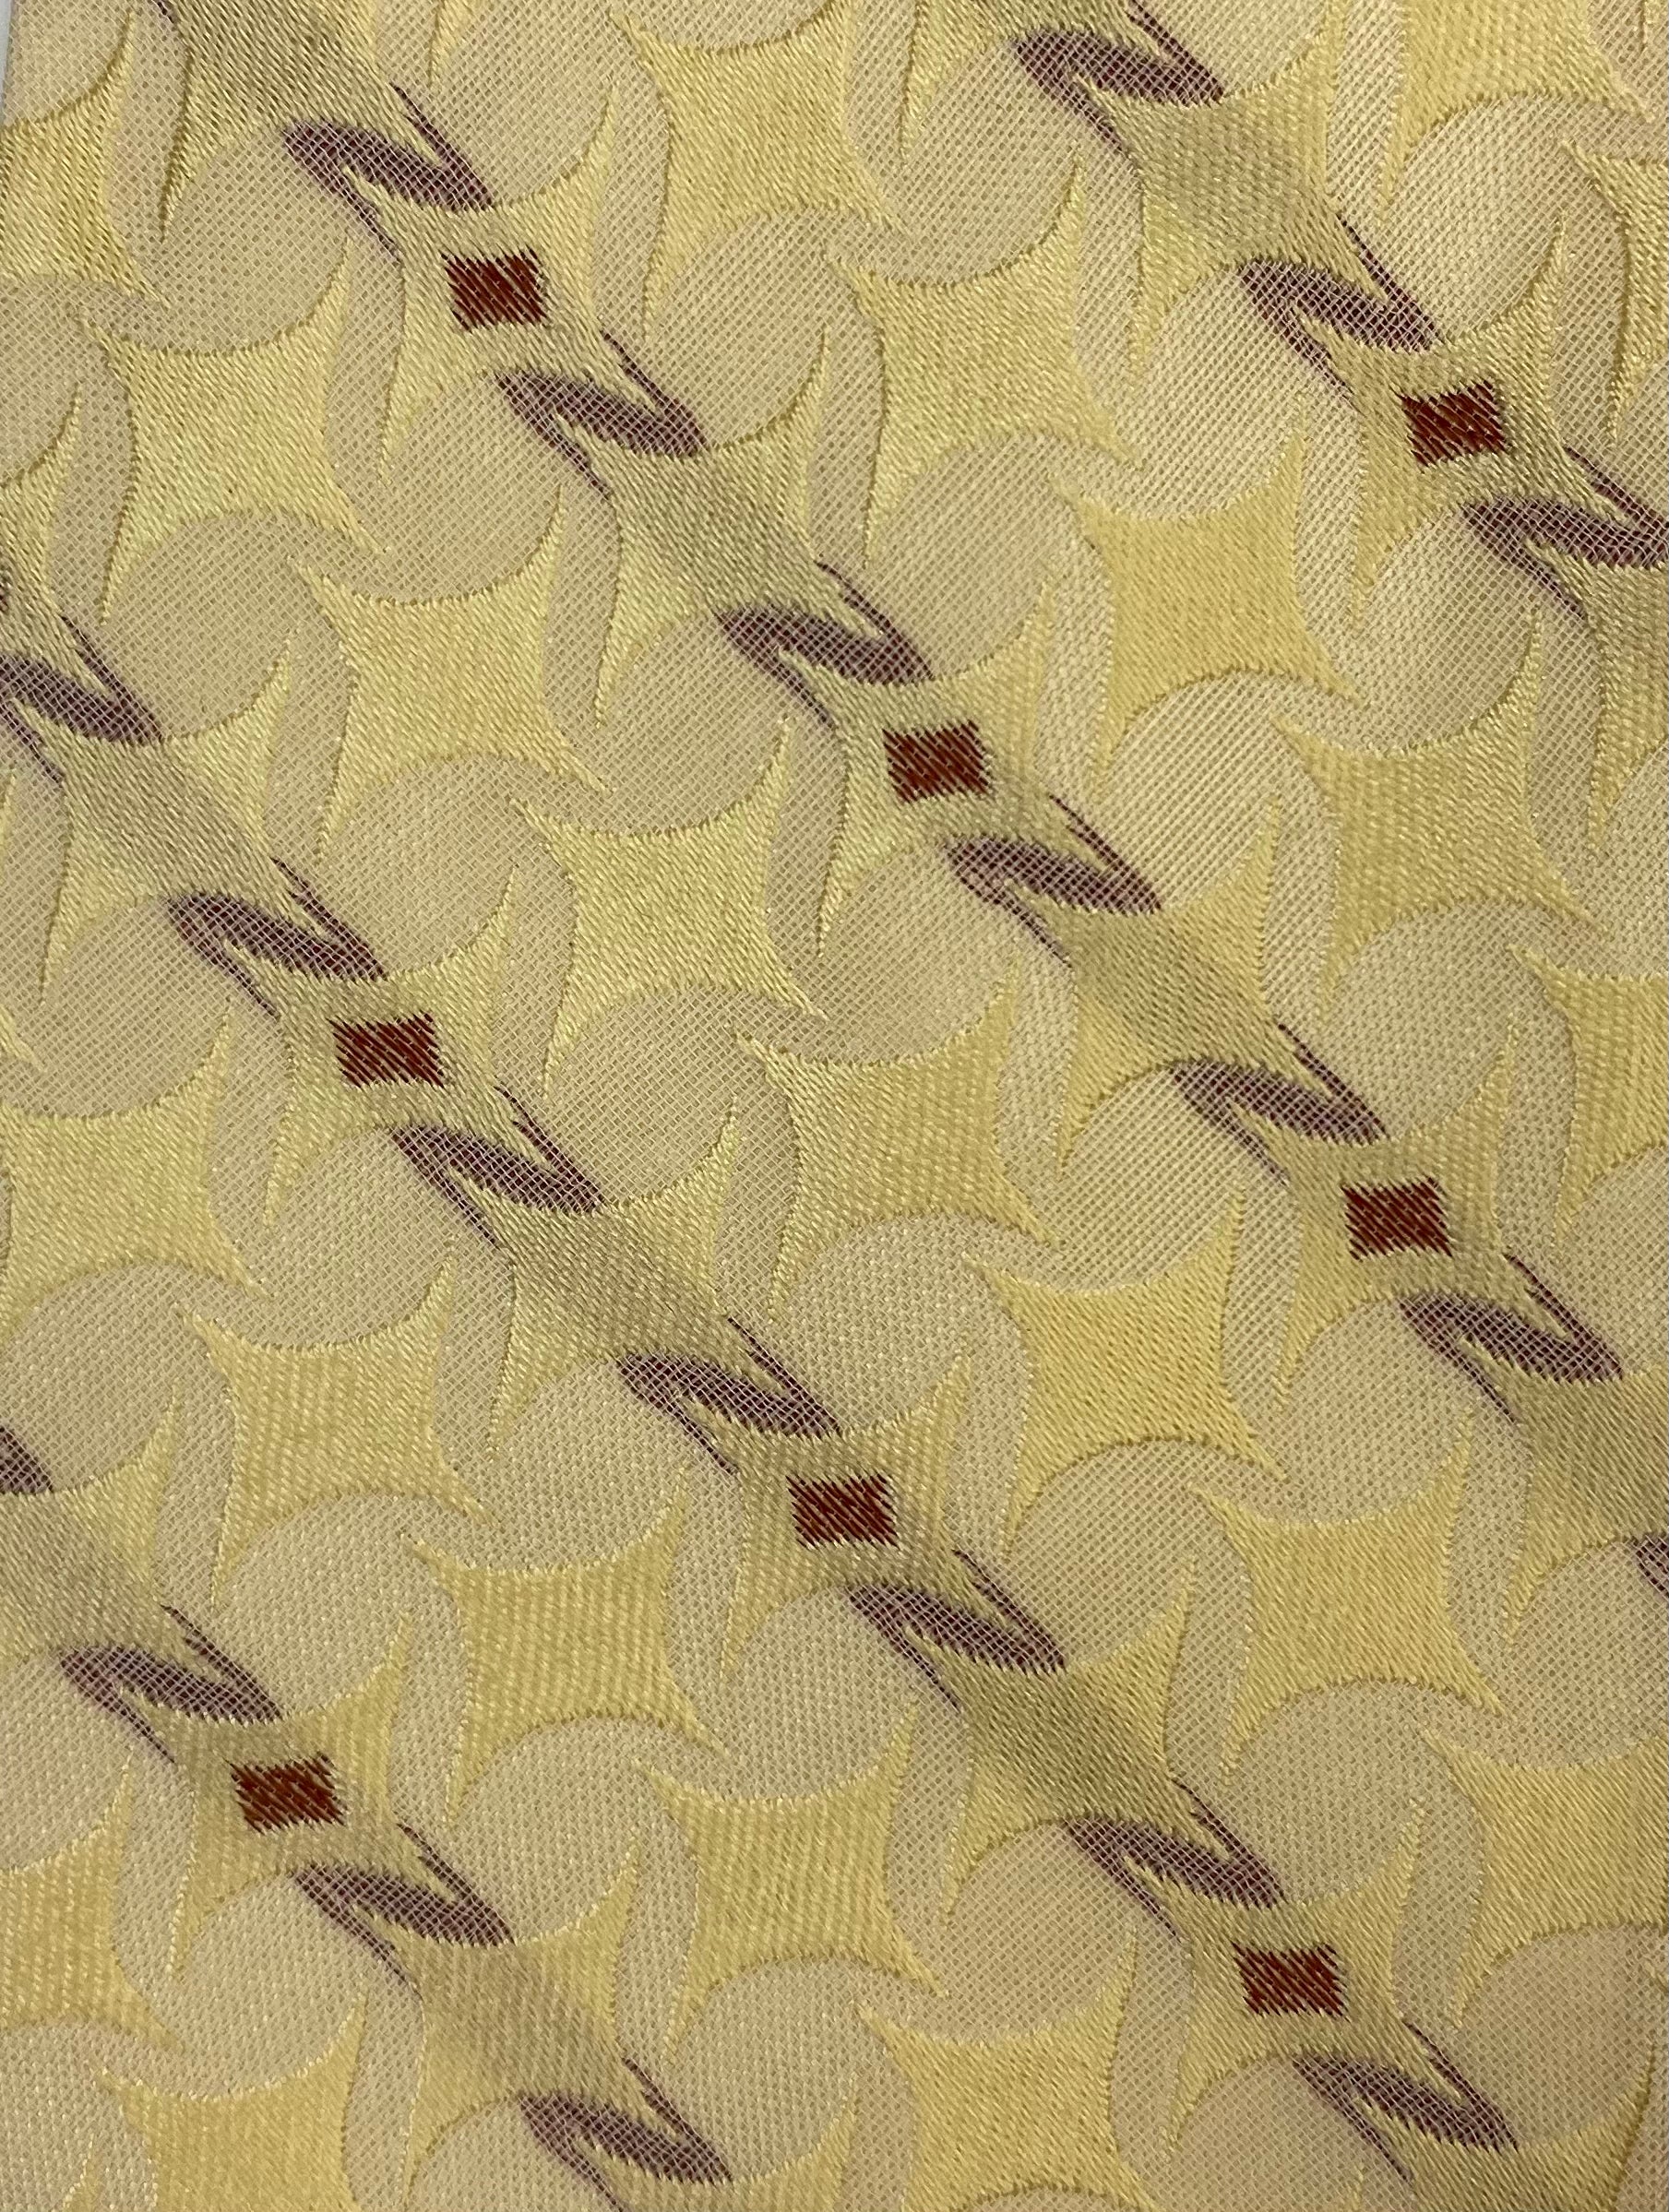 90s Deadstock Silk Necktie, Men's Vintage Gold Diagonal Stripe Pattern Tie, NOS